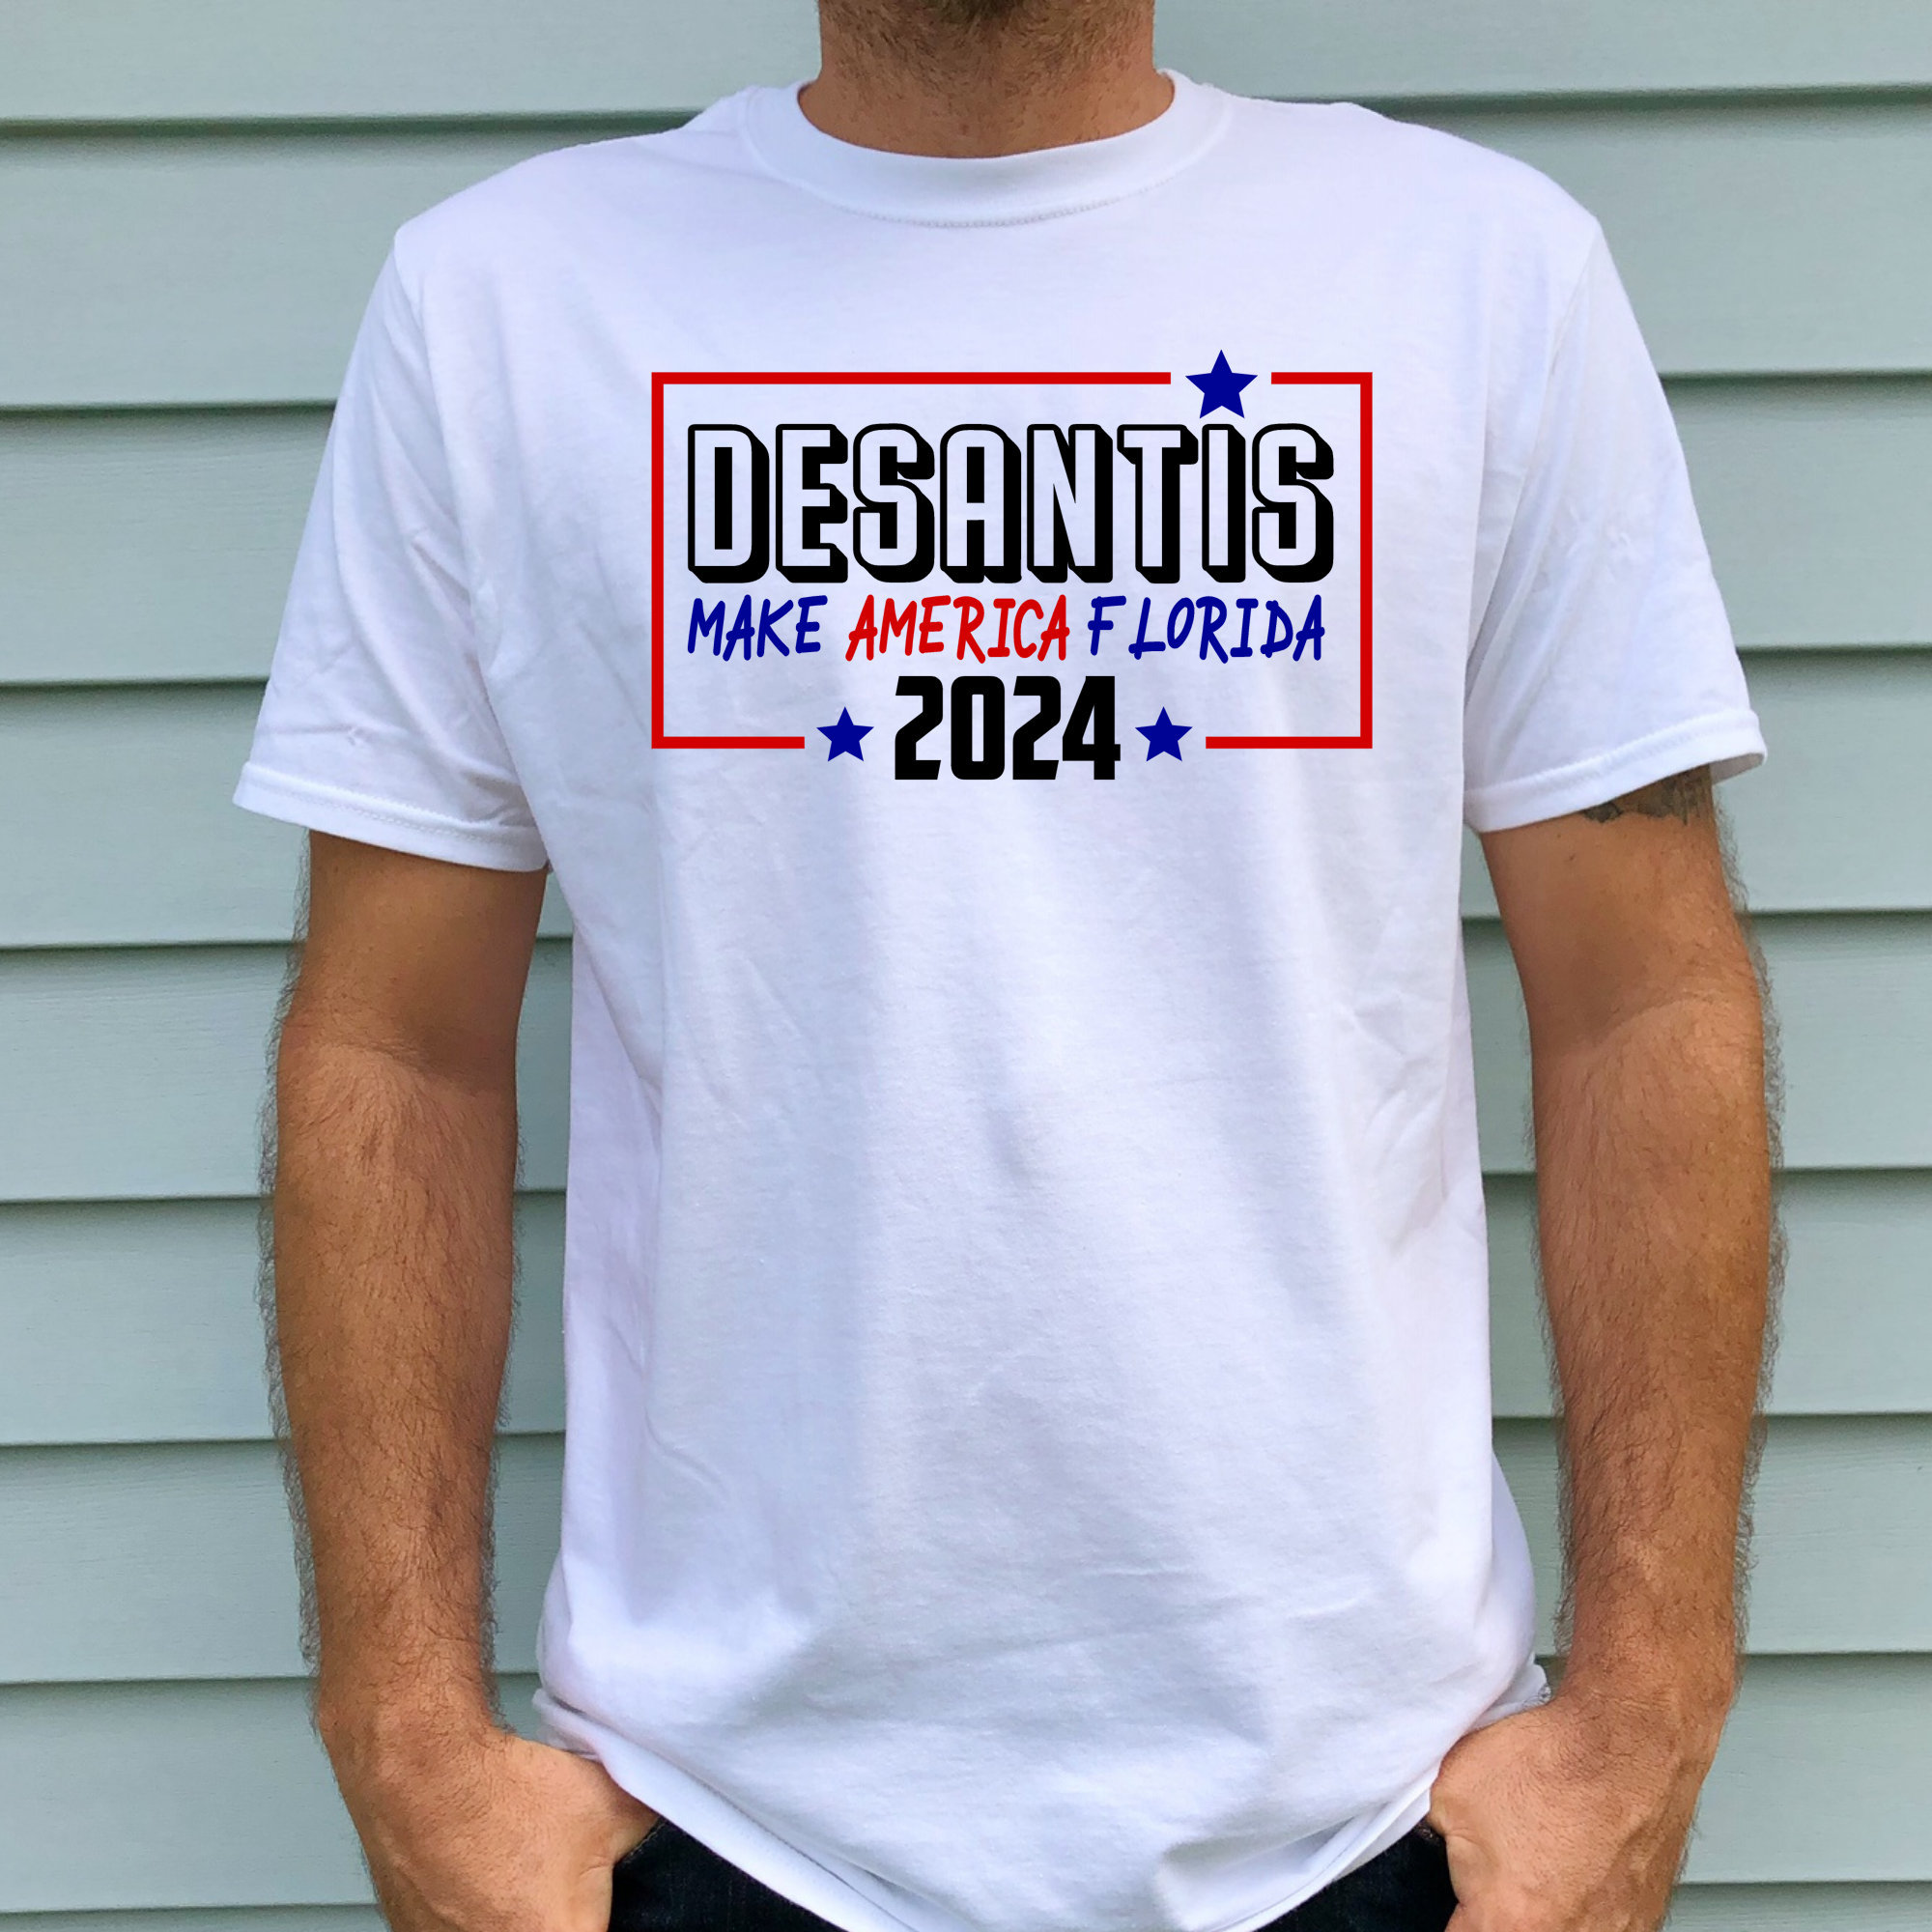 DeSantis Make America Florida 2024 Shirt,Make America Florida Shirt